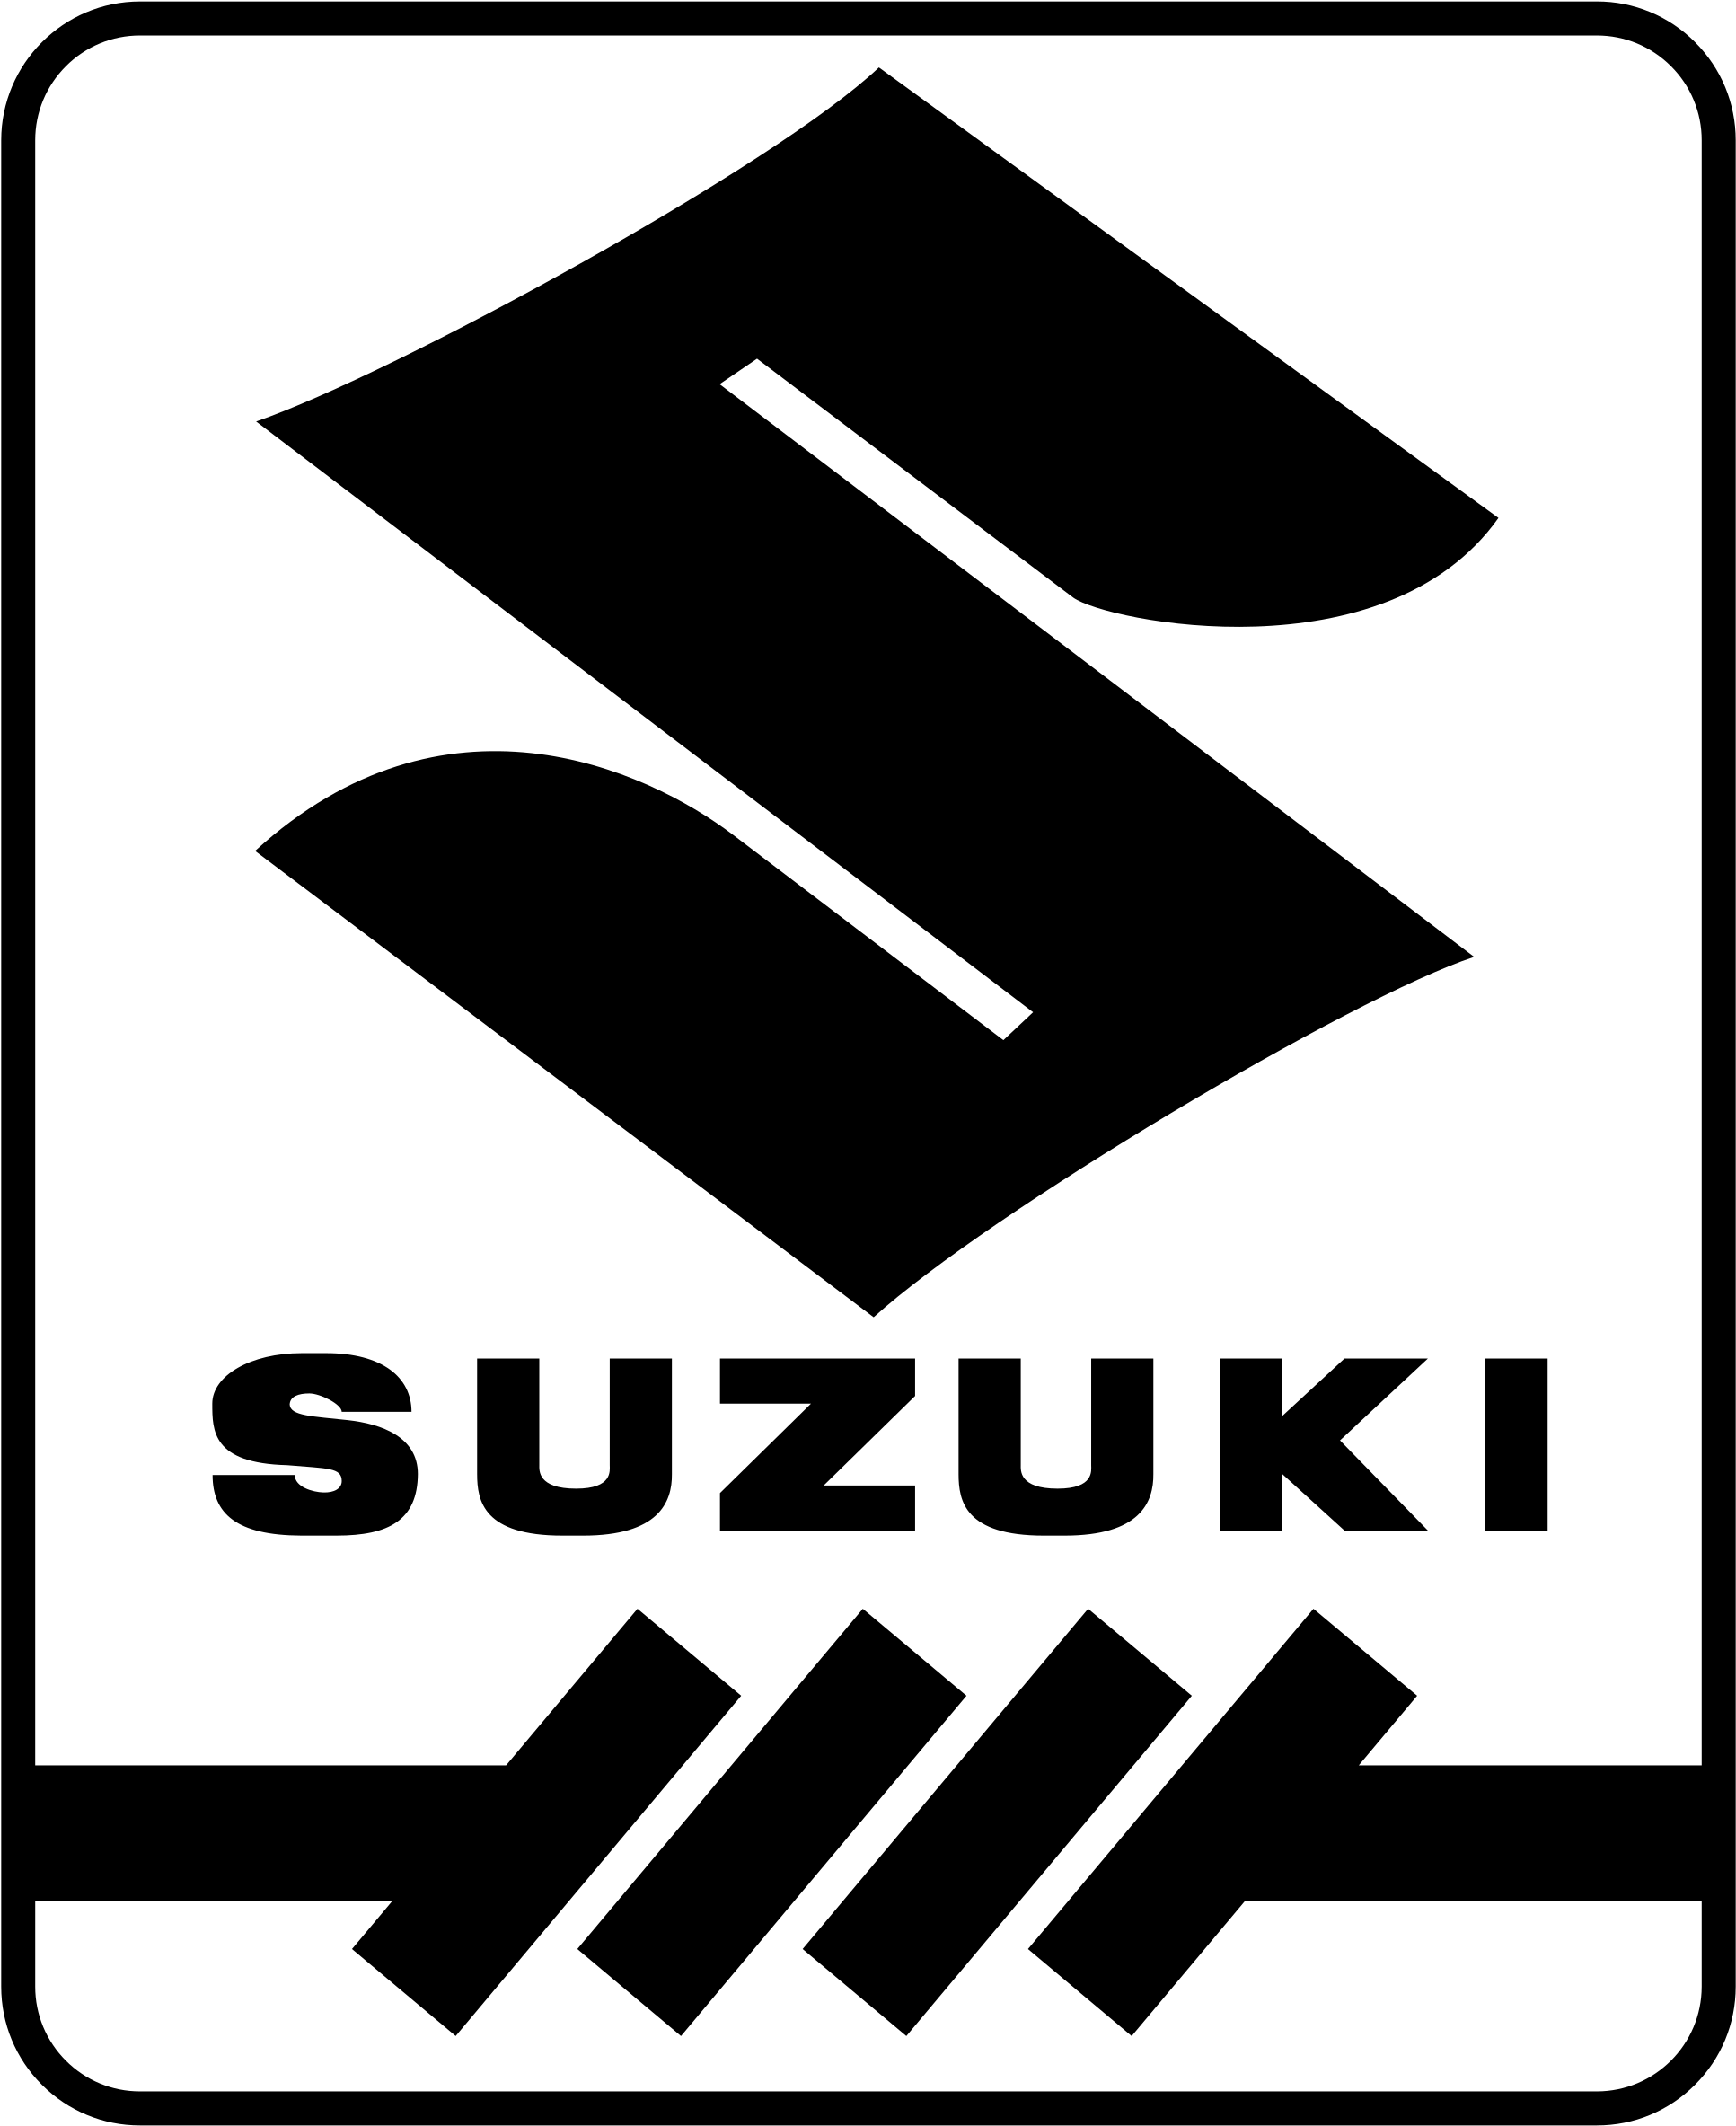 Símbolo Suzuki PNG imagen Transparente